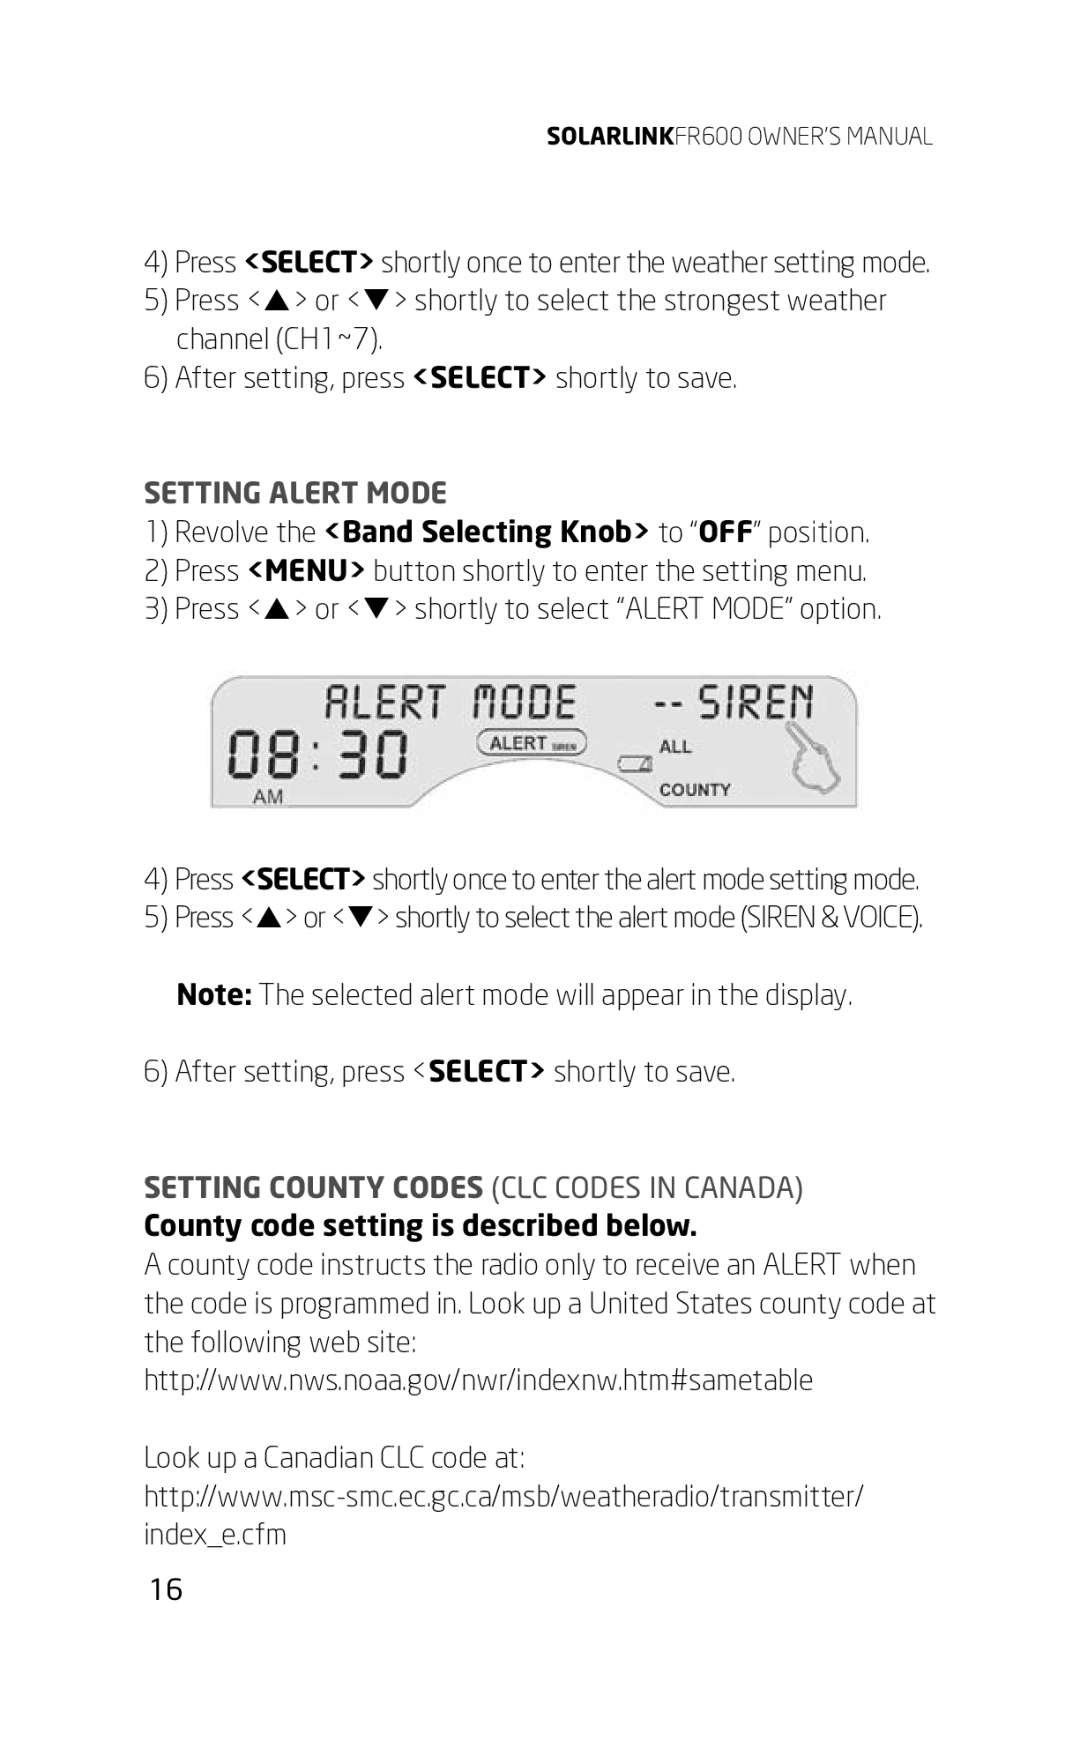 Eton FR600 Setting Alert Mode, Setting County Codes Clc Codes In Canada, County code setting is described below 